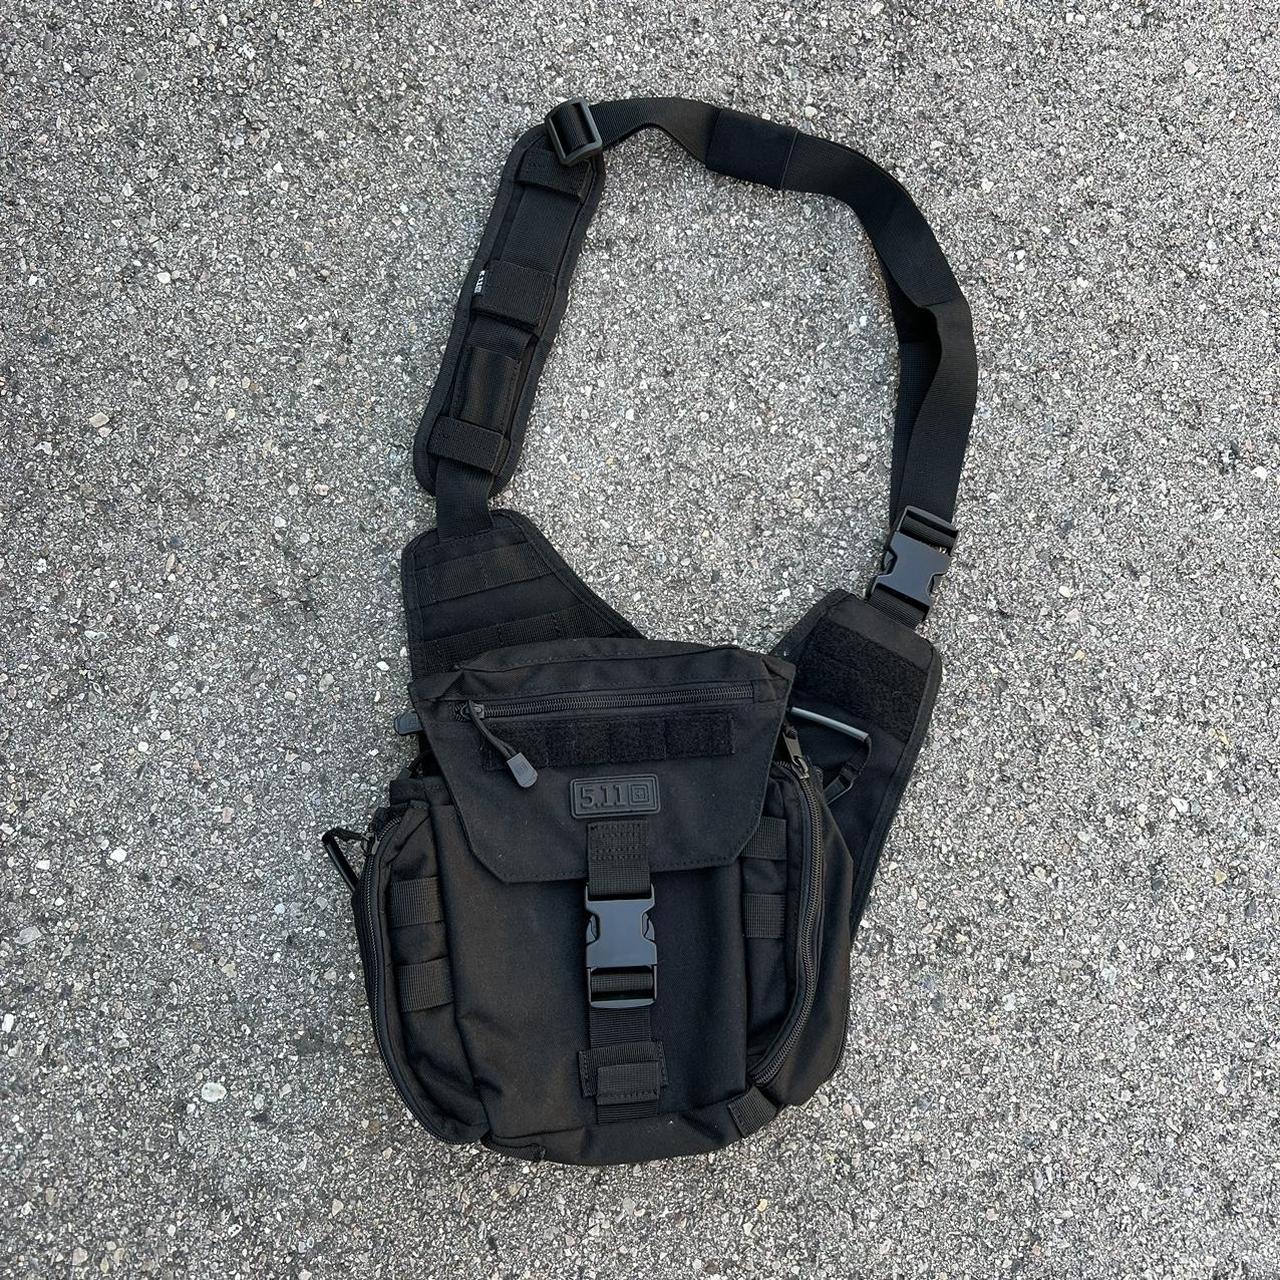 Black crossbody bag / sling bag Crossbody bag /... - Depop